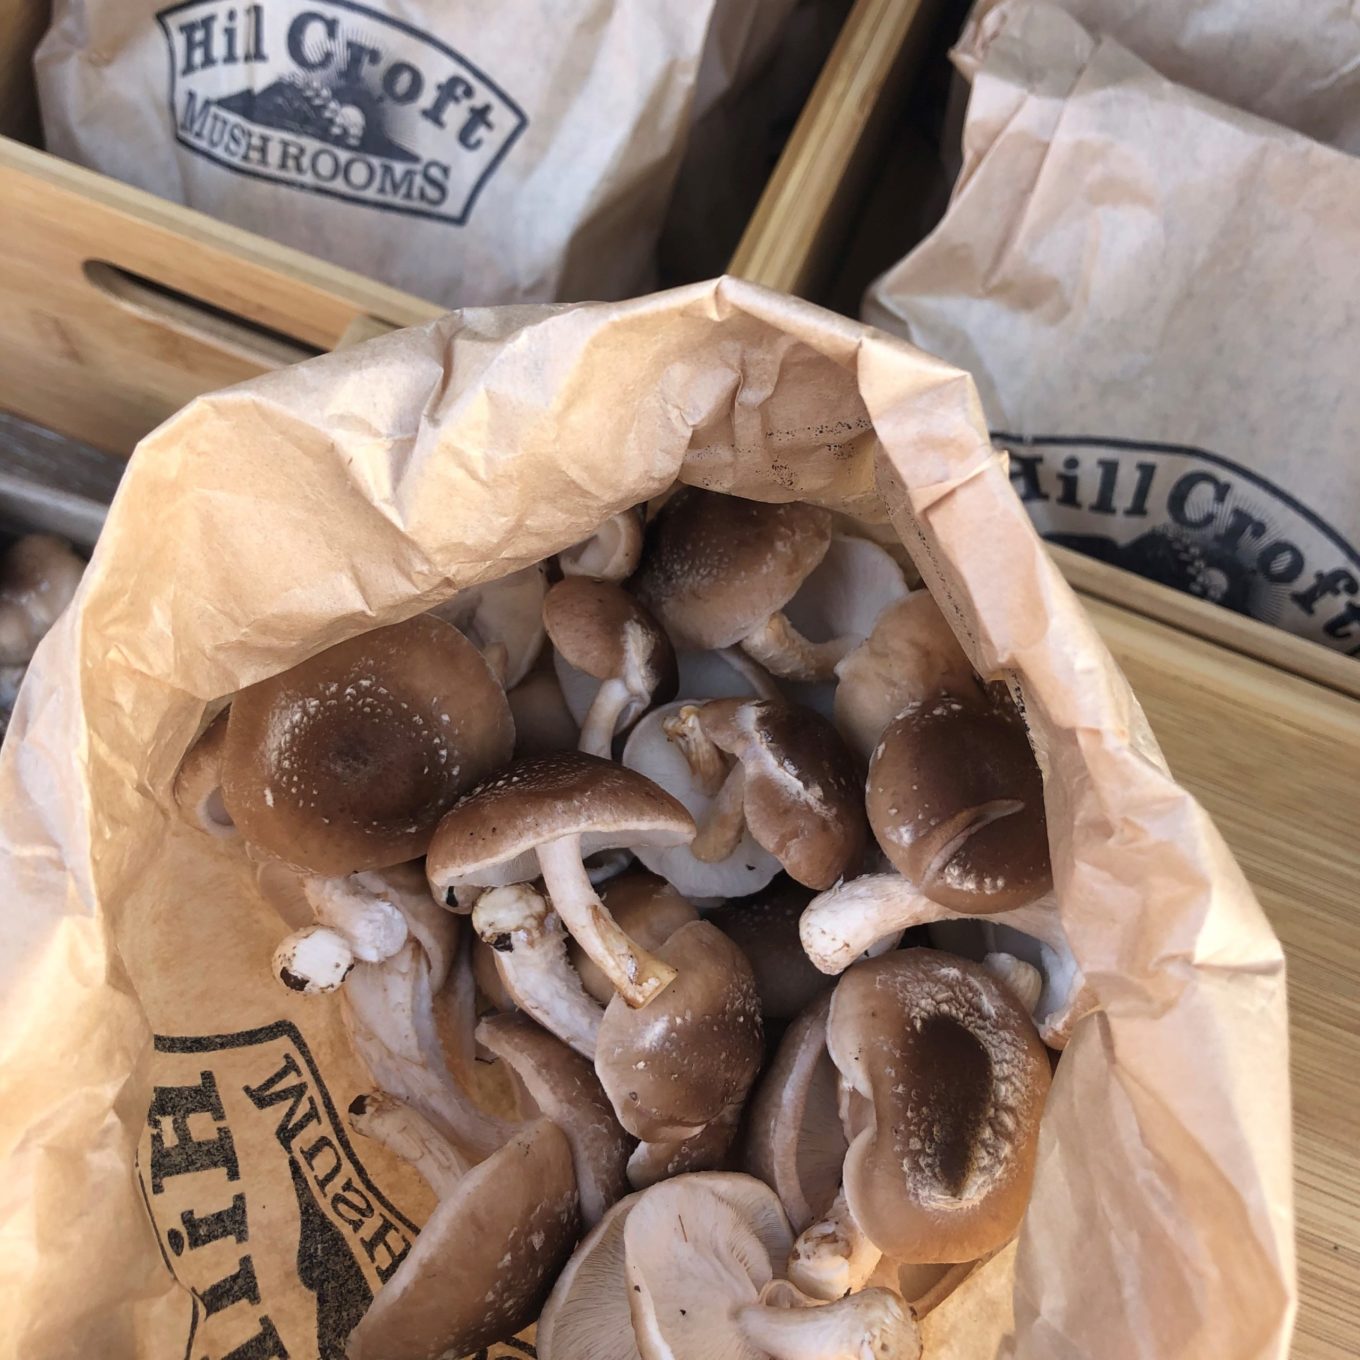 Hillcroft Mushrooms